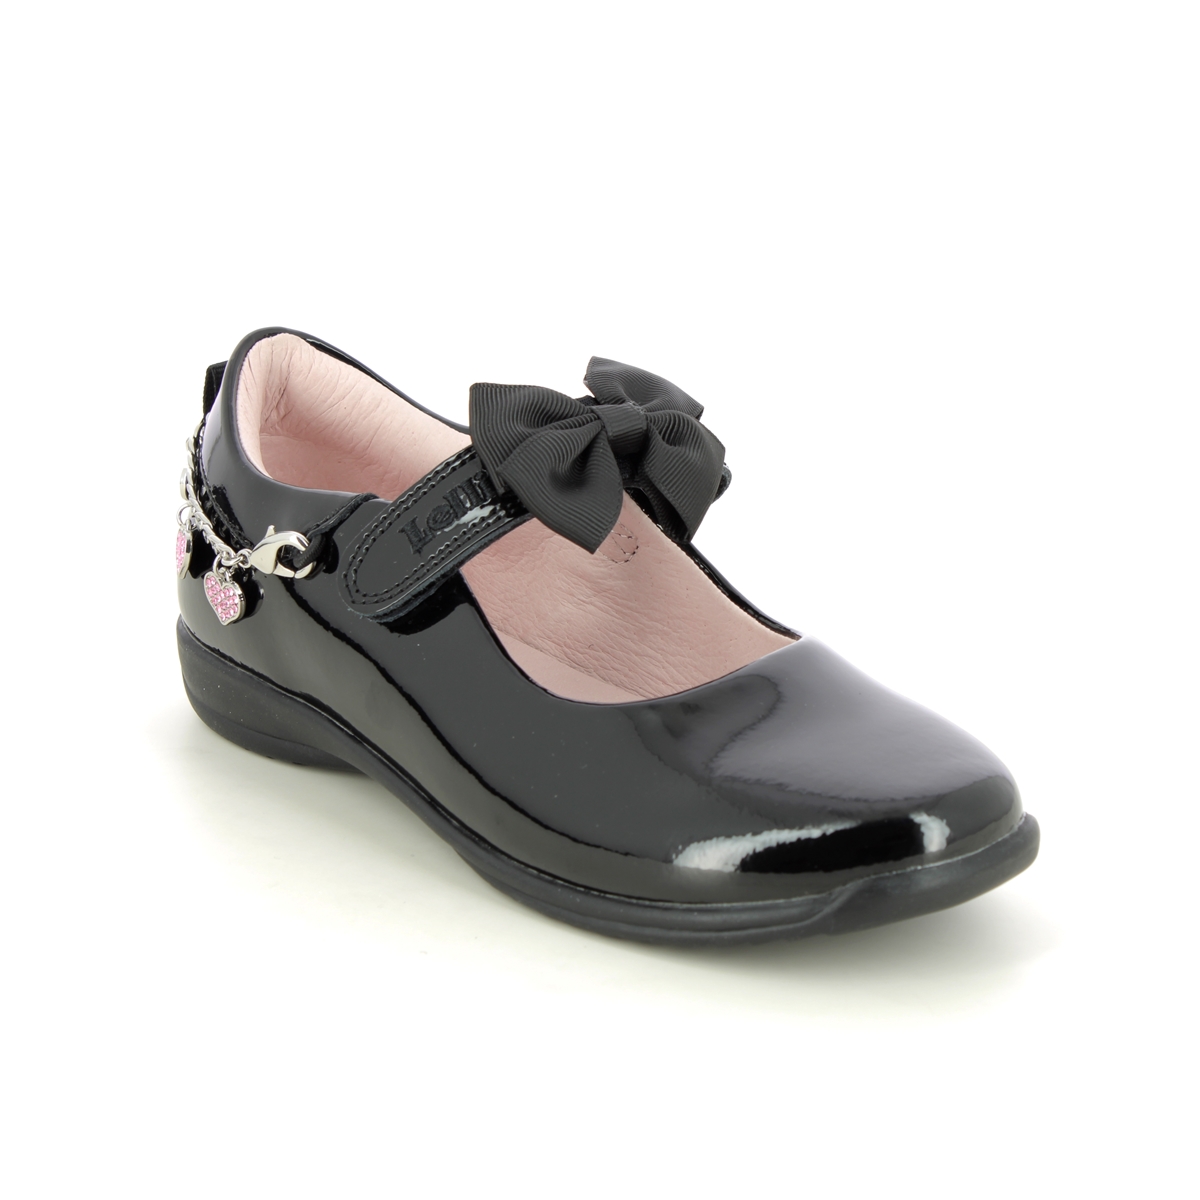 Lelli Kelly - Angel Bracelet F In Black Patent Lk8224-Db01 In Size 27 In Plain Black Patent Girls Shoes  In Black Patent For School For kids